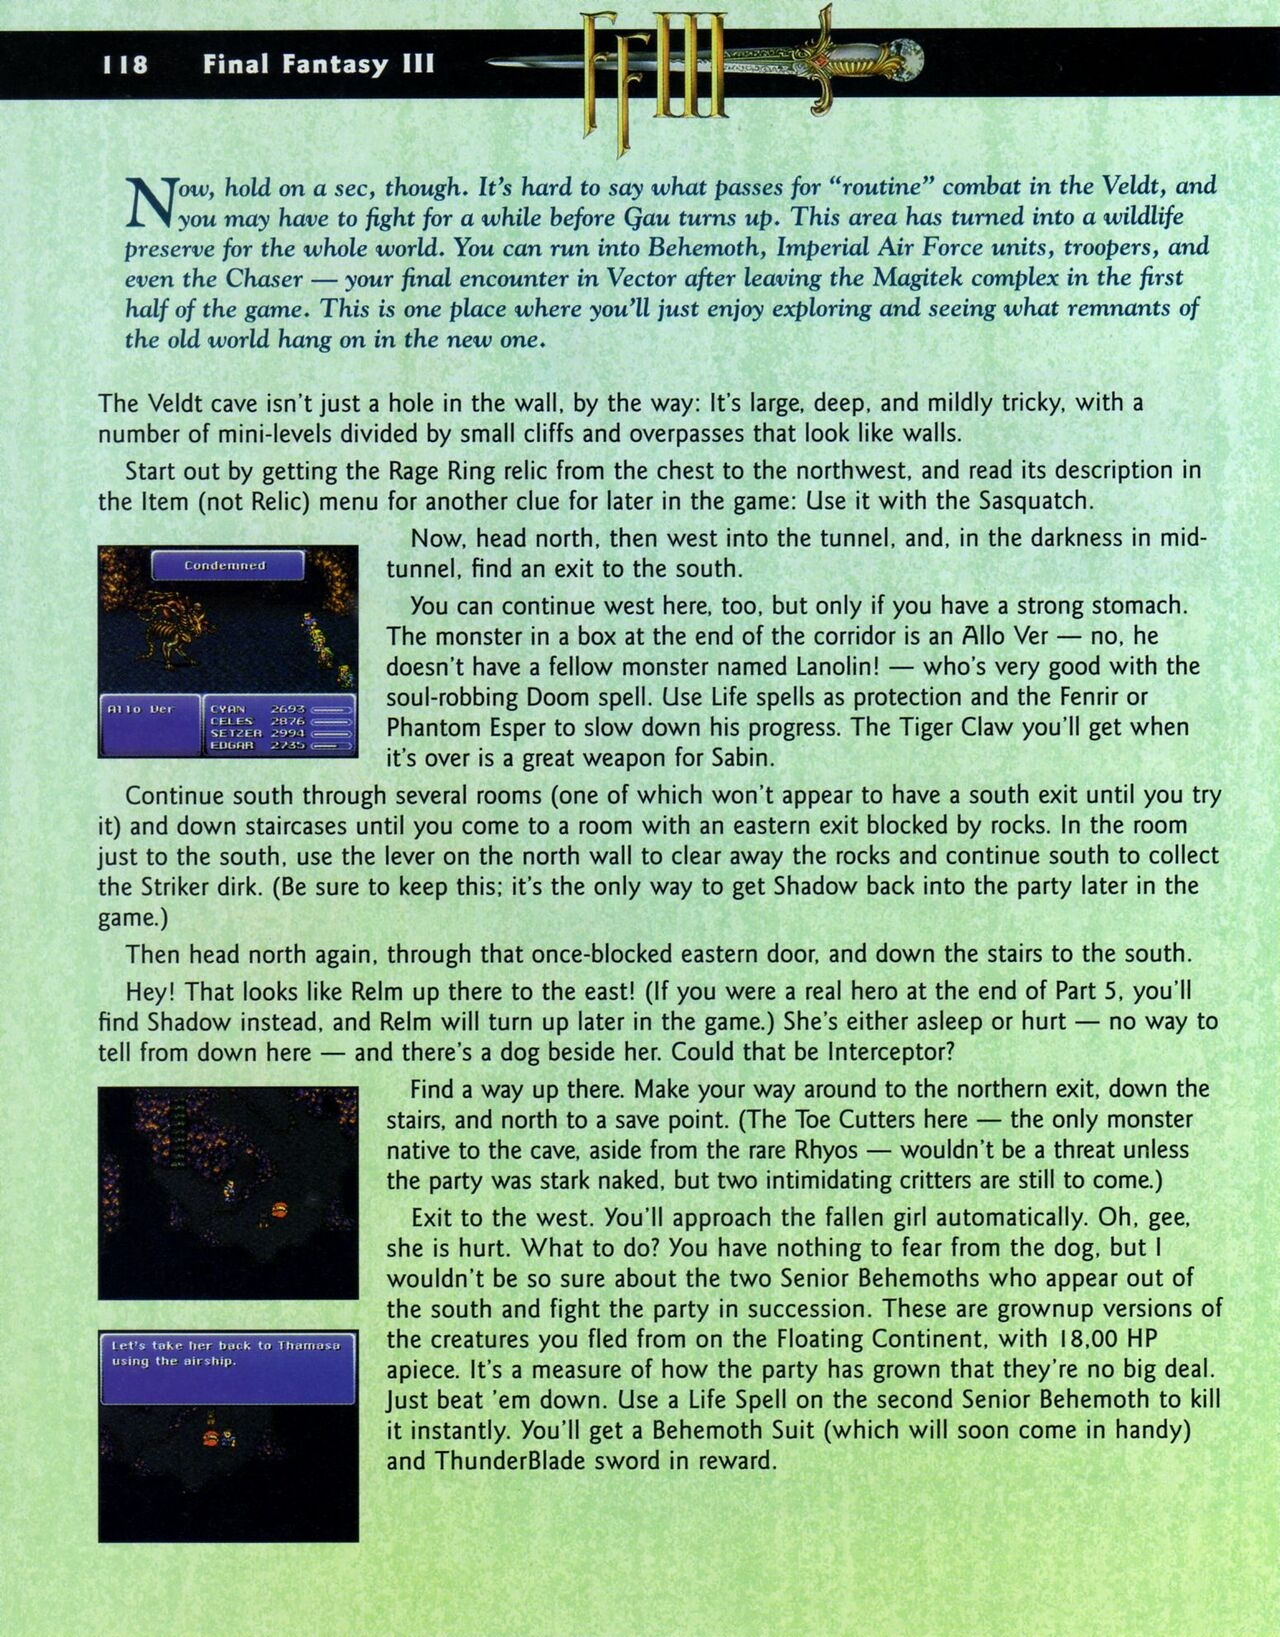 Final Fantasy III Players Guide 135